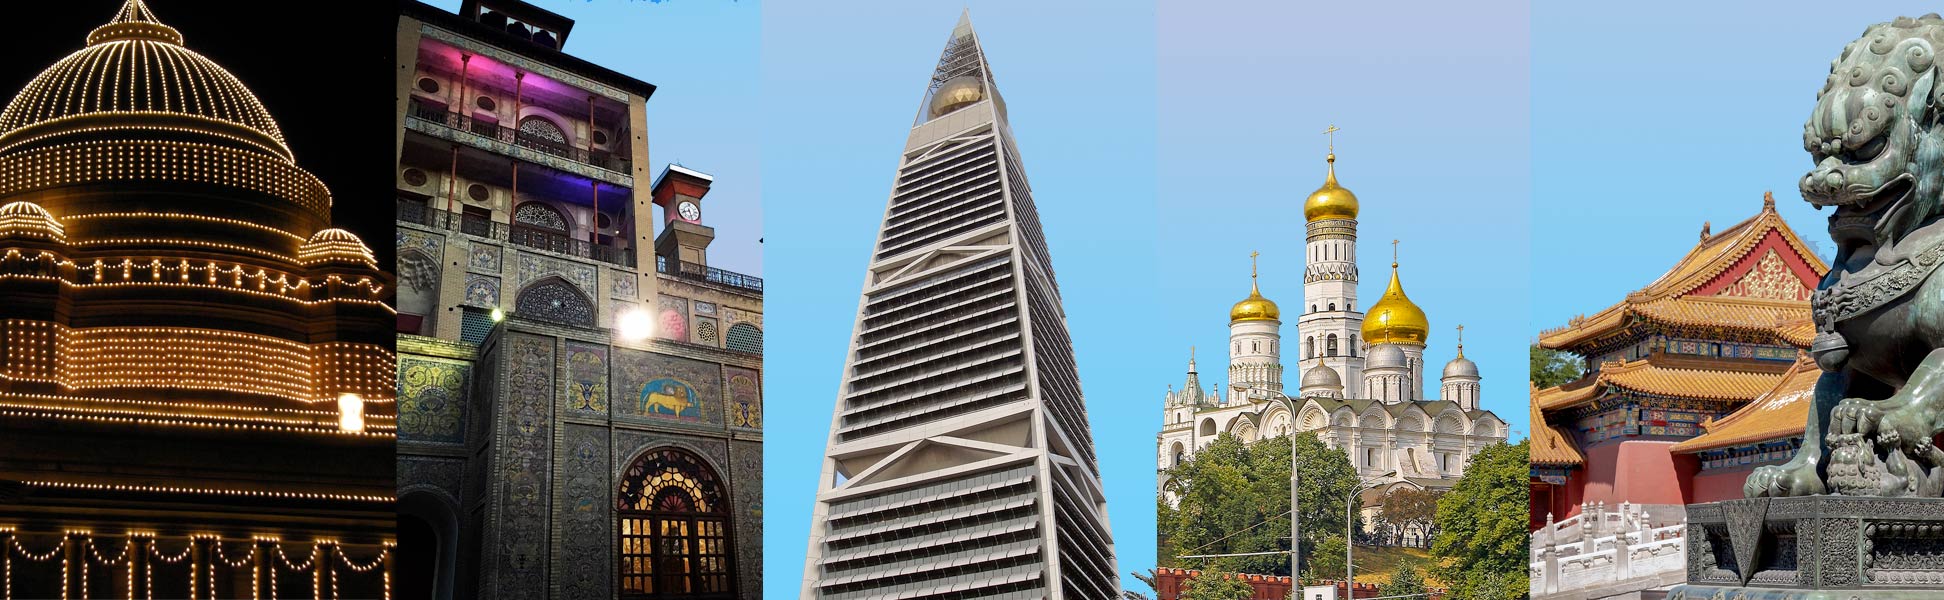 Buildings in New Delhi, India; Tehran, Iran; Riyadh, Saudi Arabia; Moscow, Russia; and Bejing in China